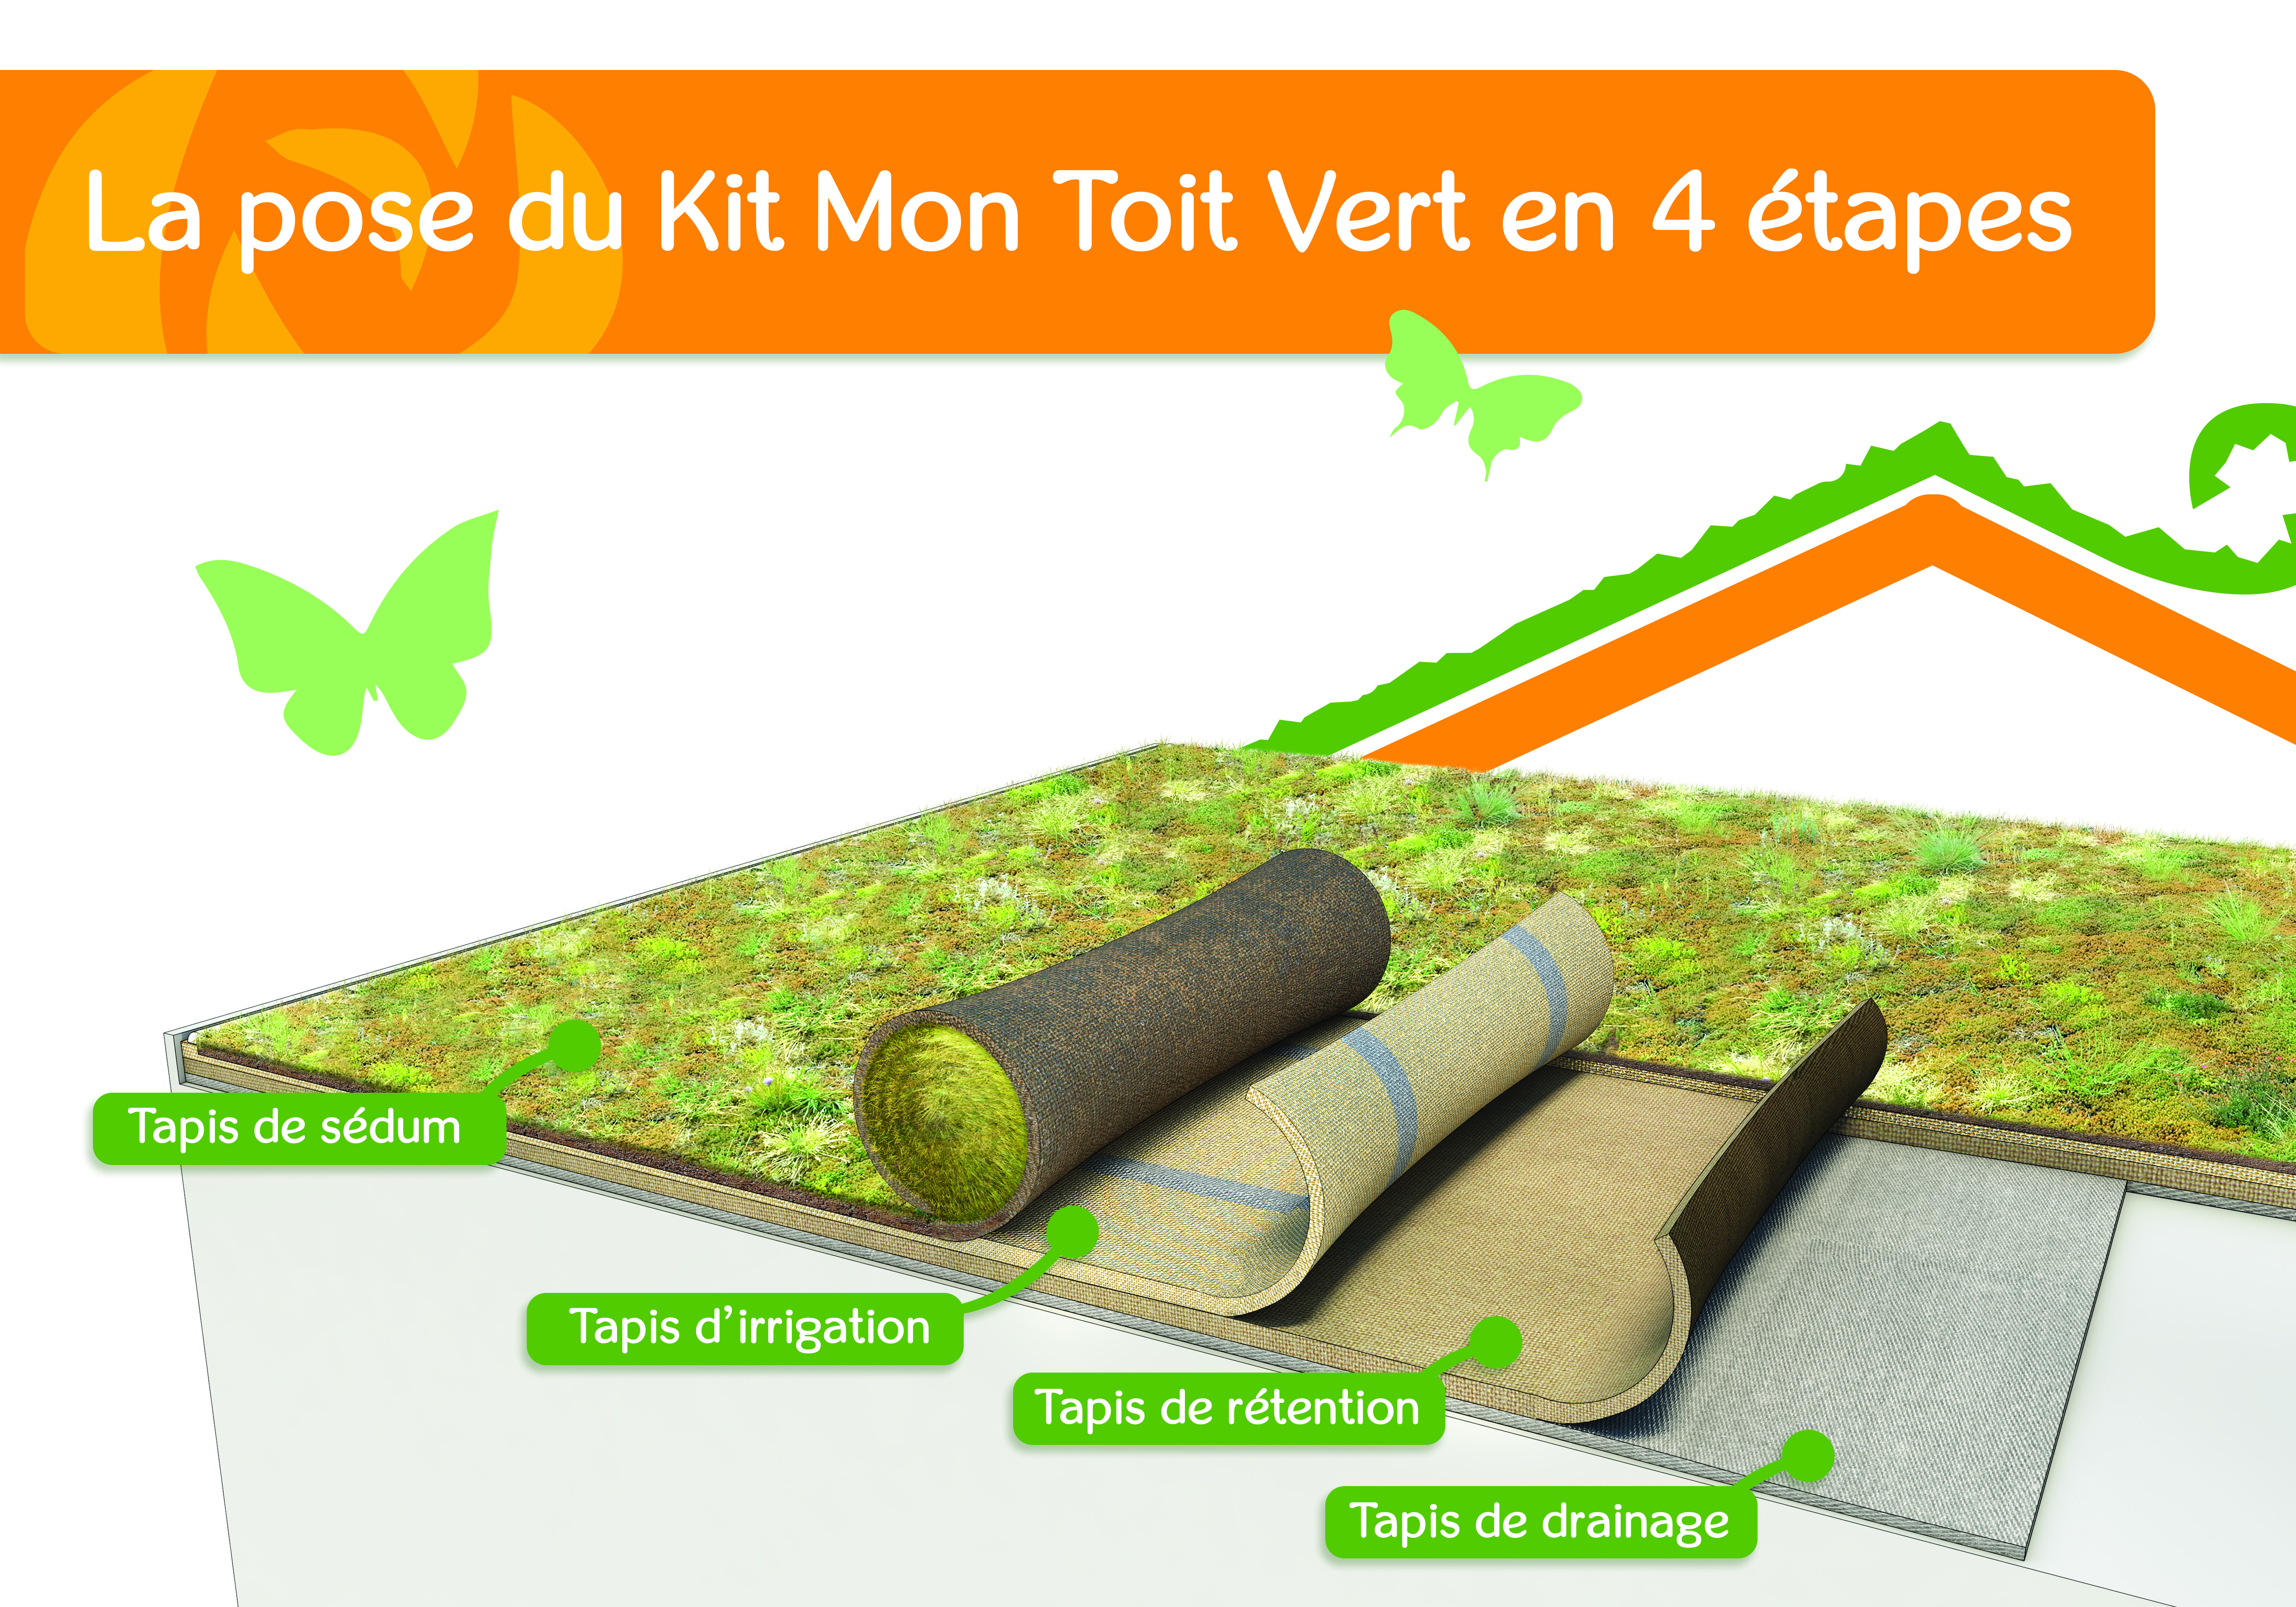 Kit de "Mon toit Vert"